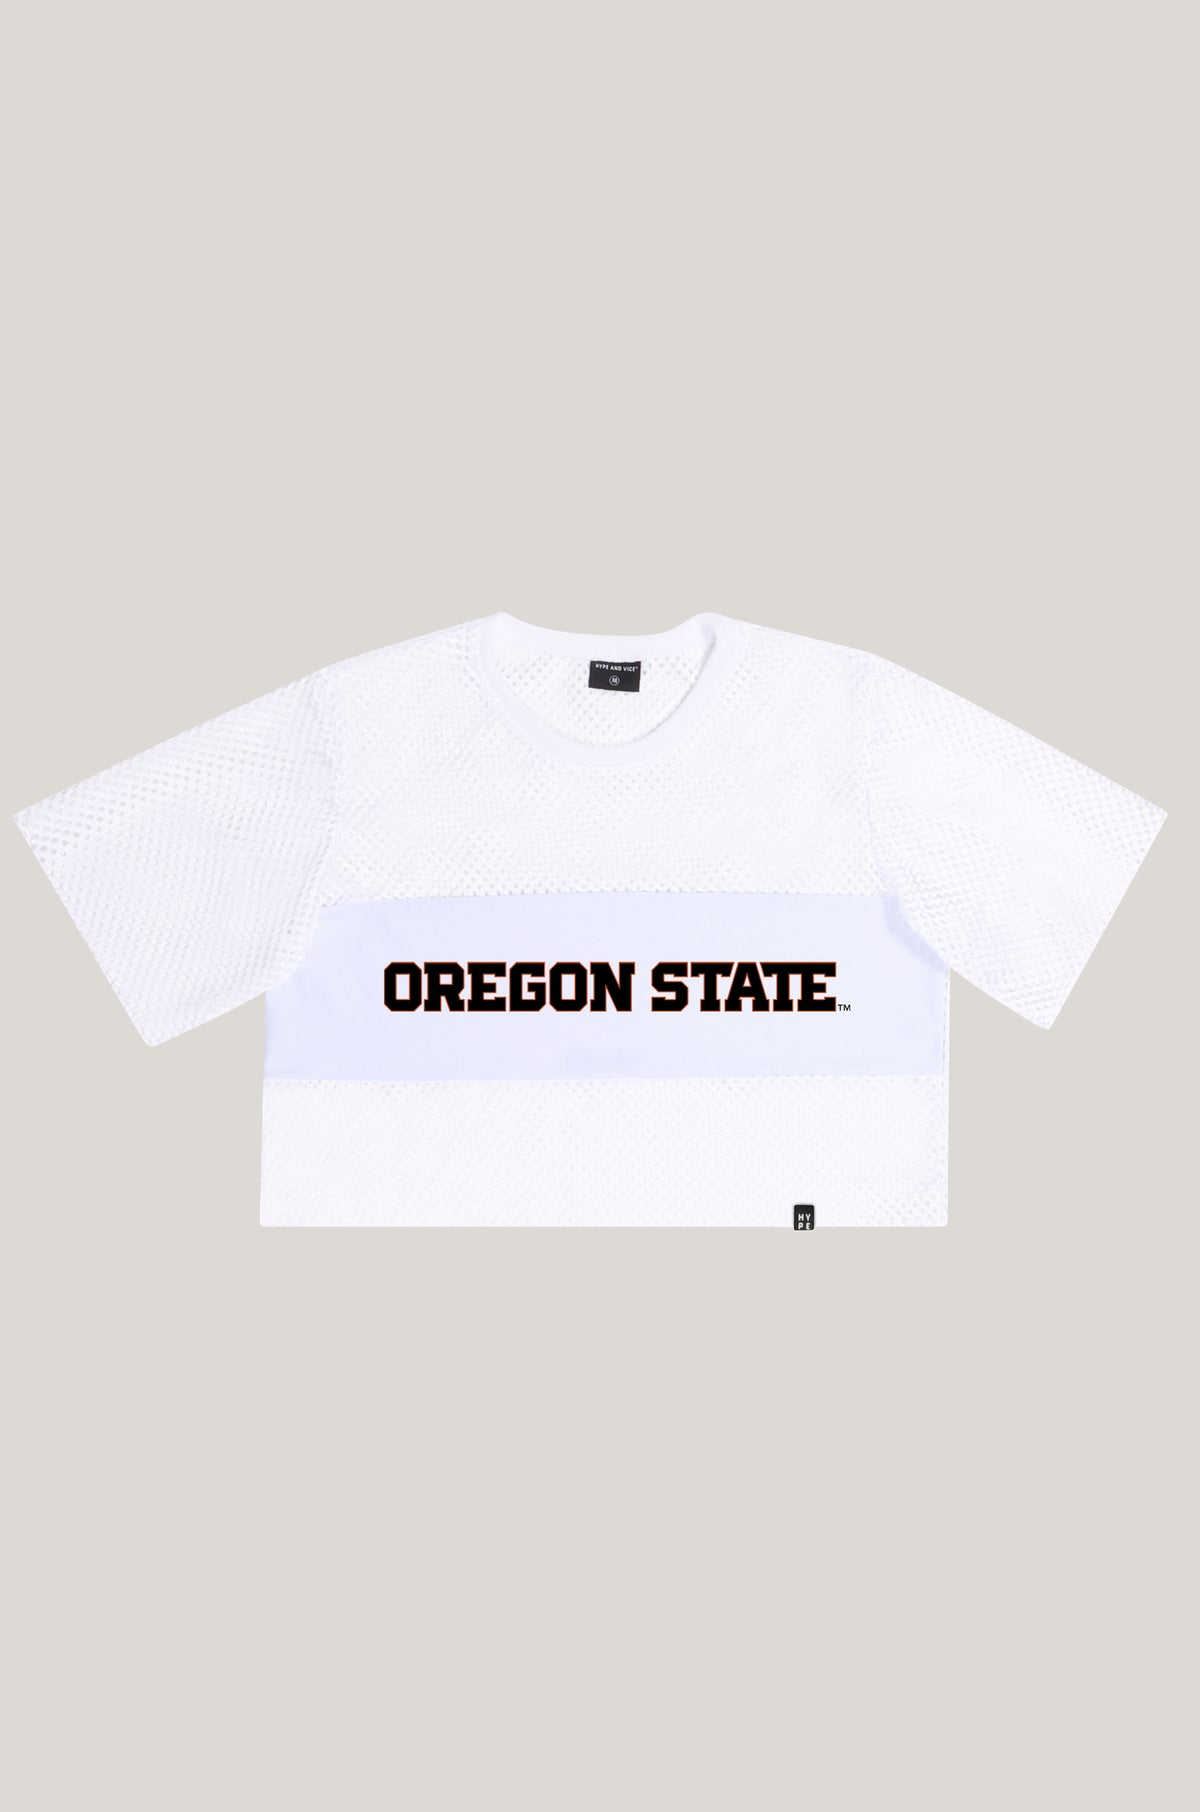 Oregon State Mesh Tee